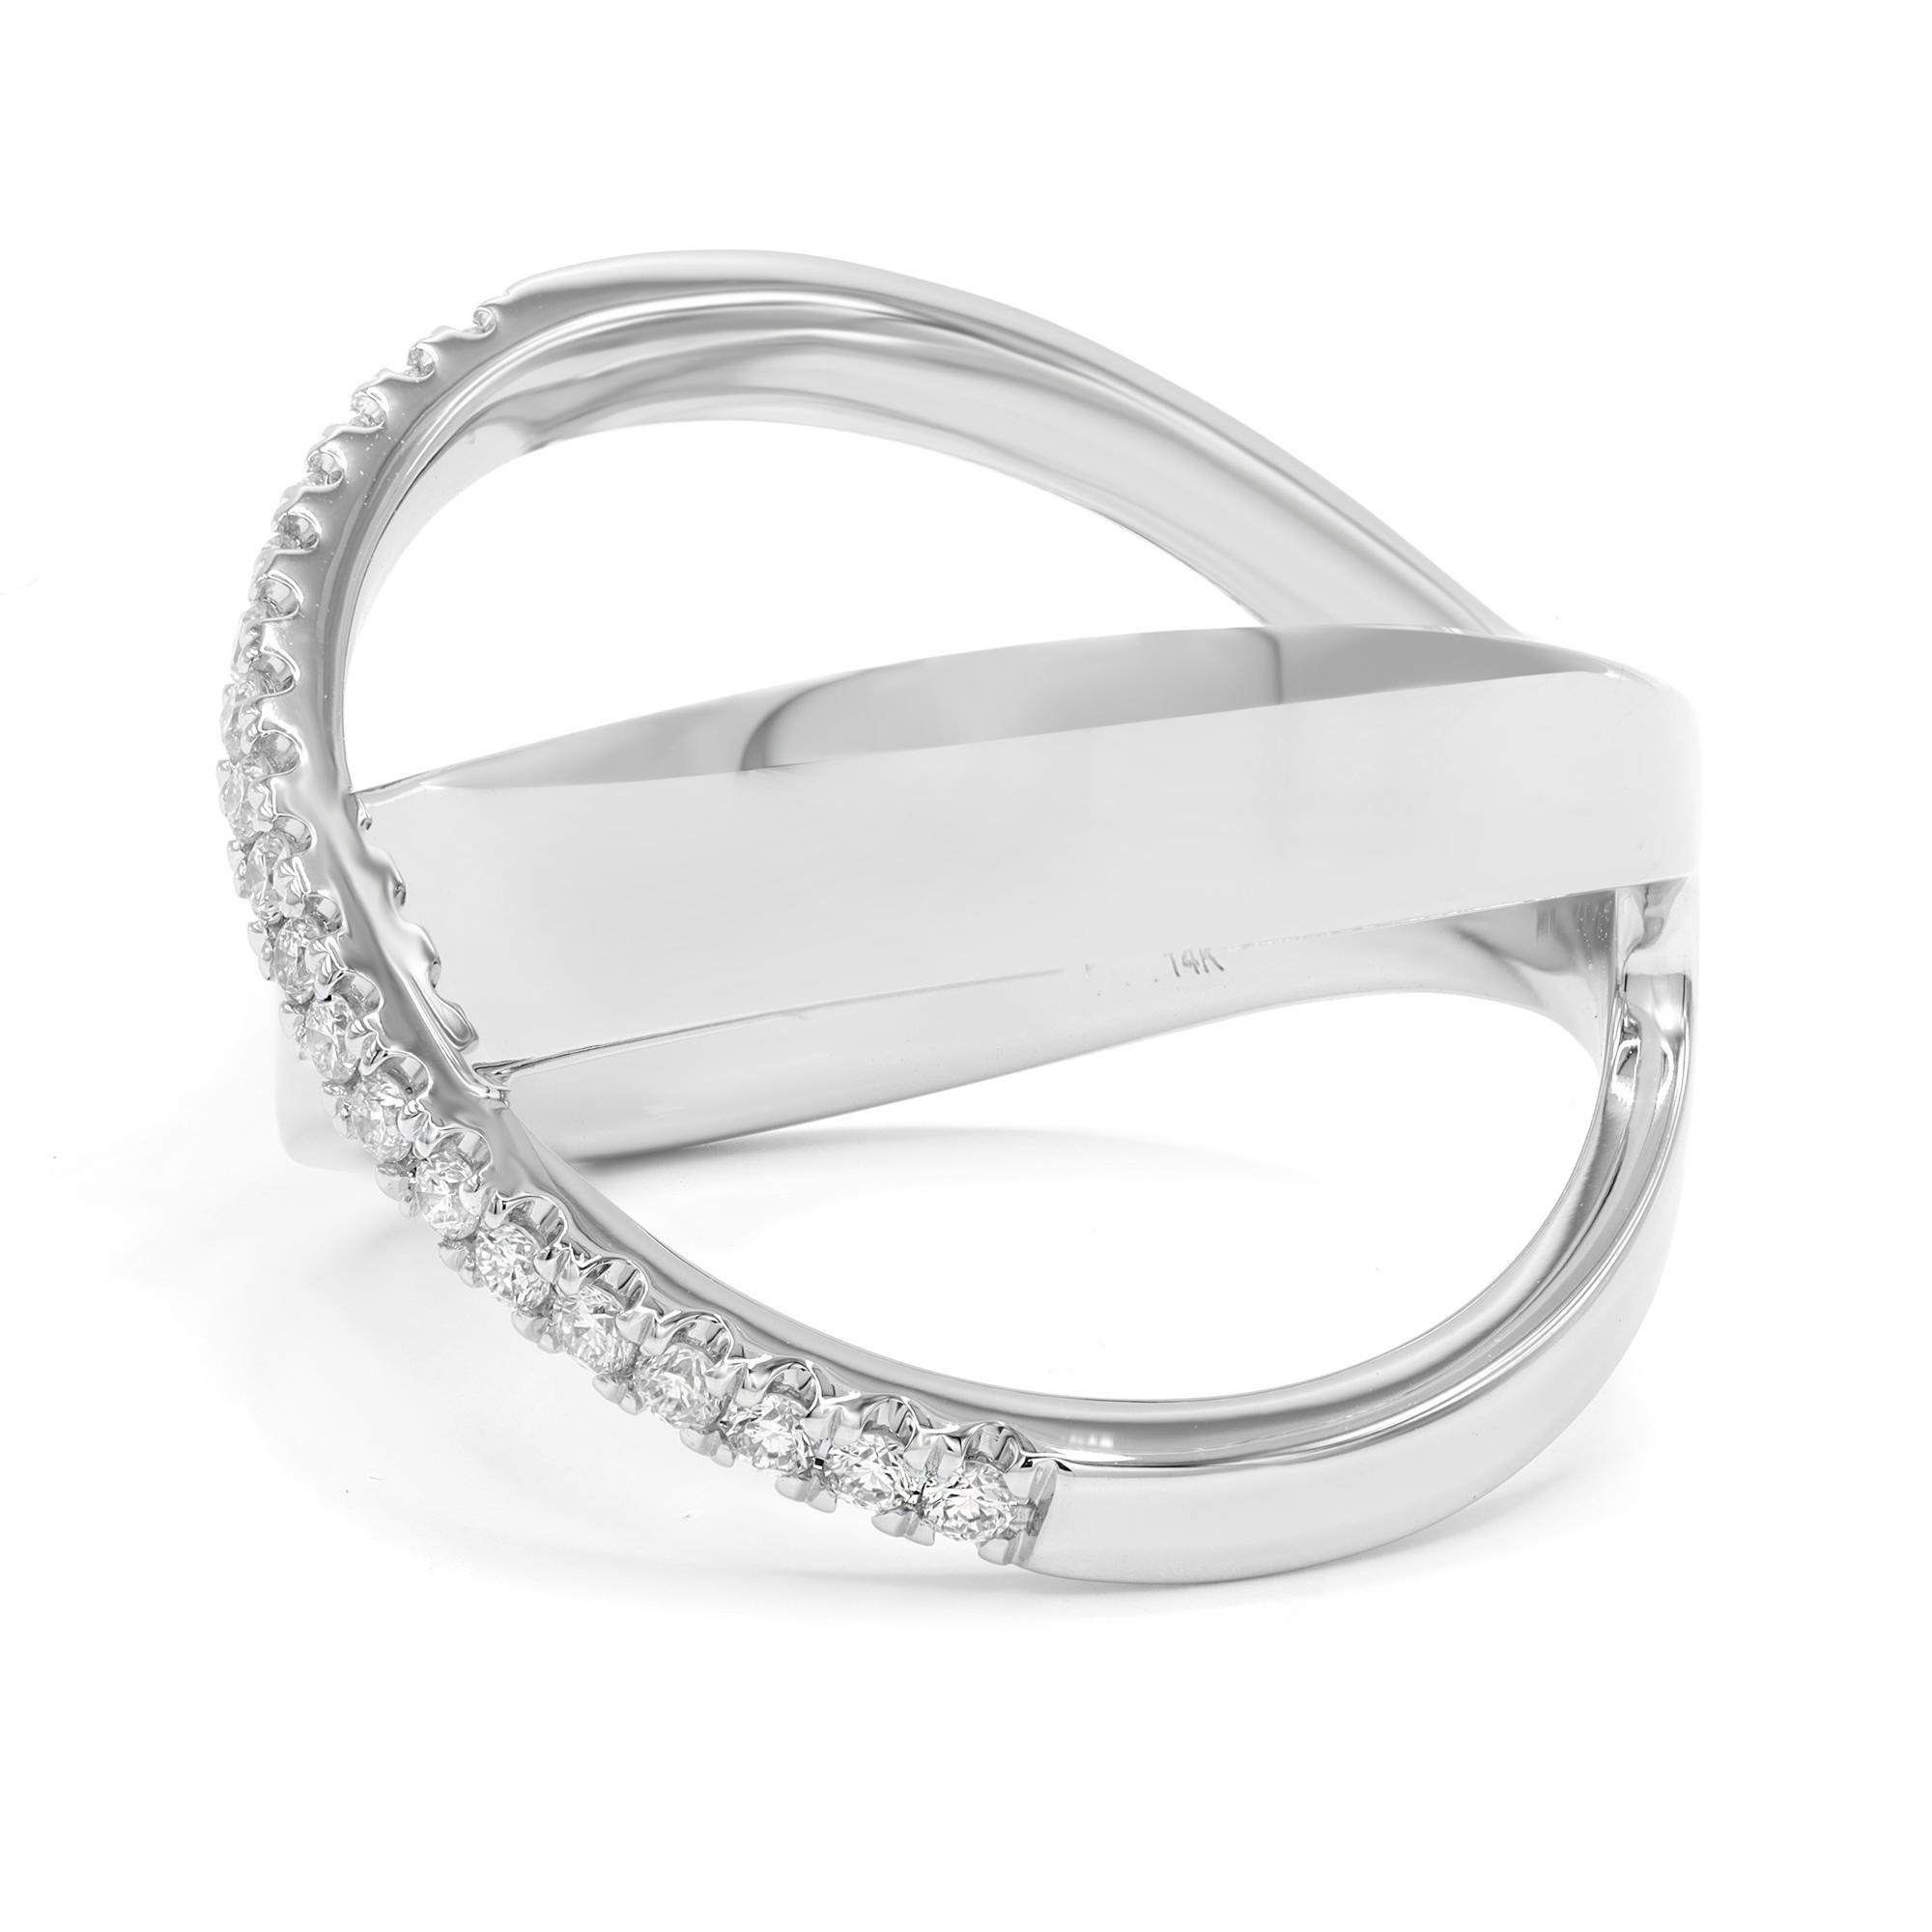 Modern Rachel Koen Pave Diamond X Ring Band 14K White Gold 0.19Cttw Size 7 For Sale